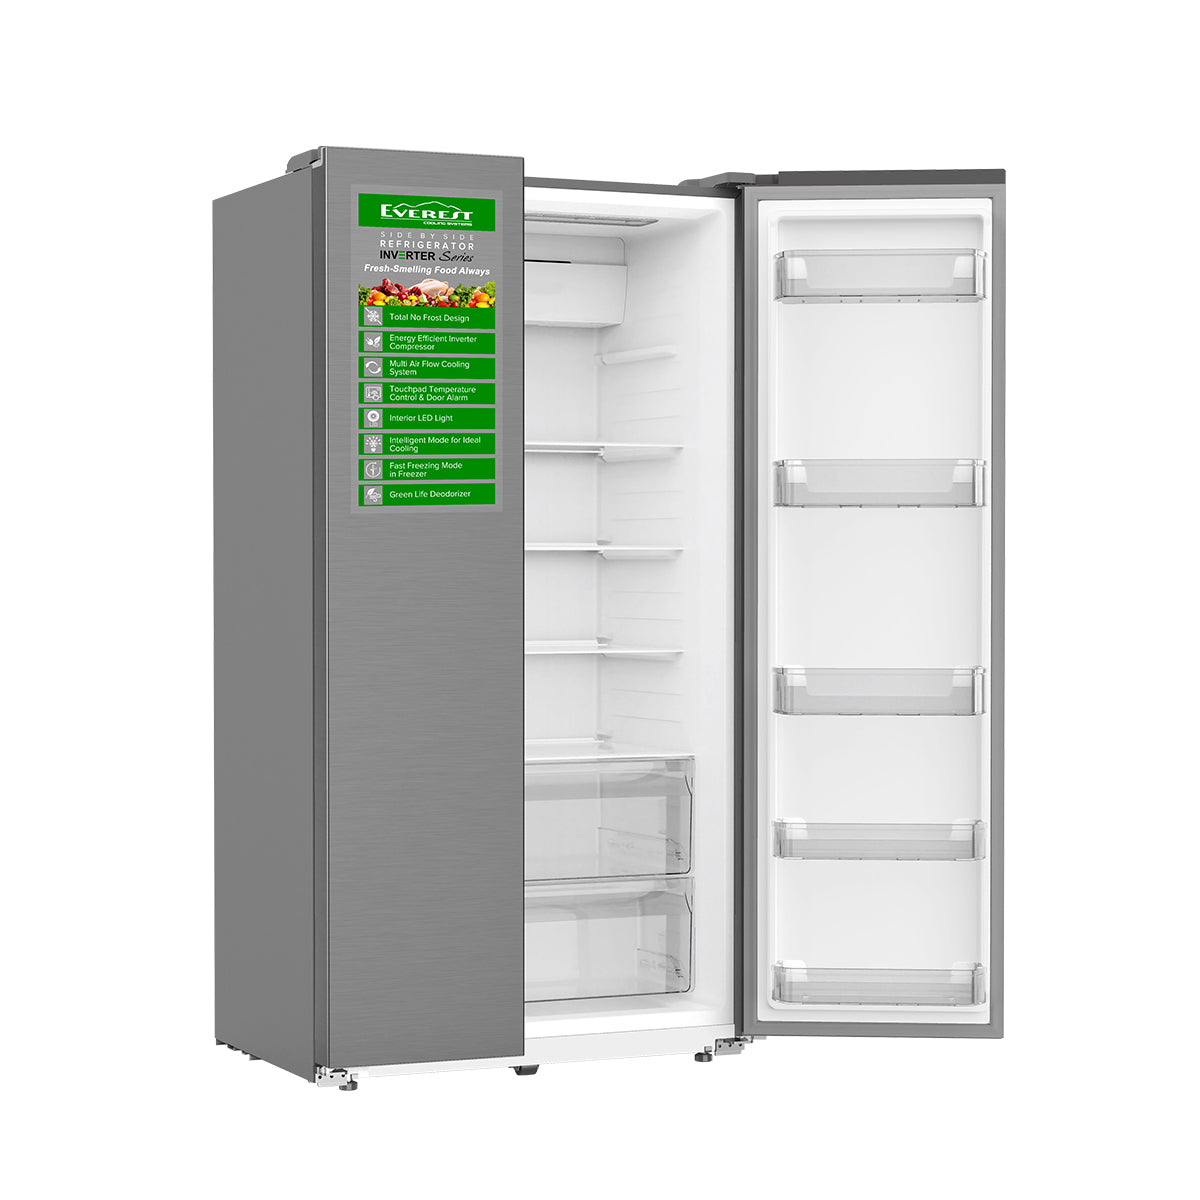 22.0 cu. ft Side by Side Inverter Series Refrigerator